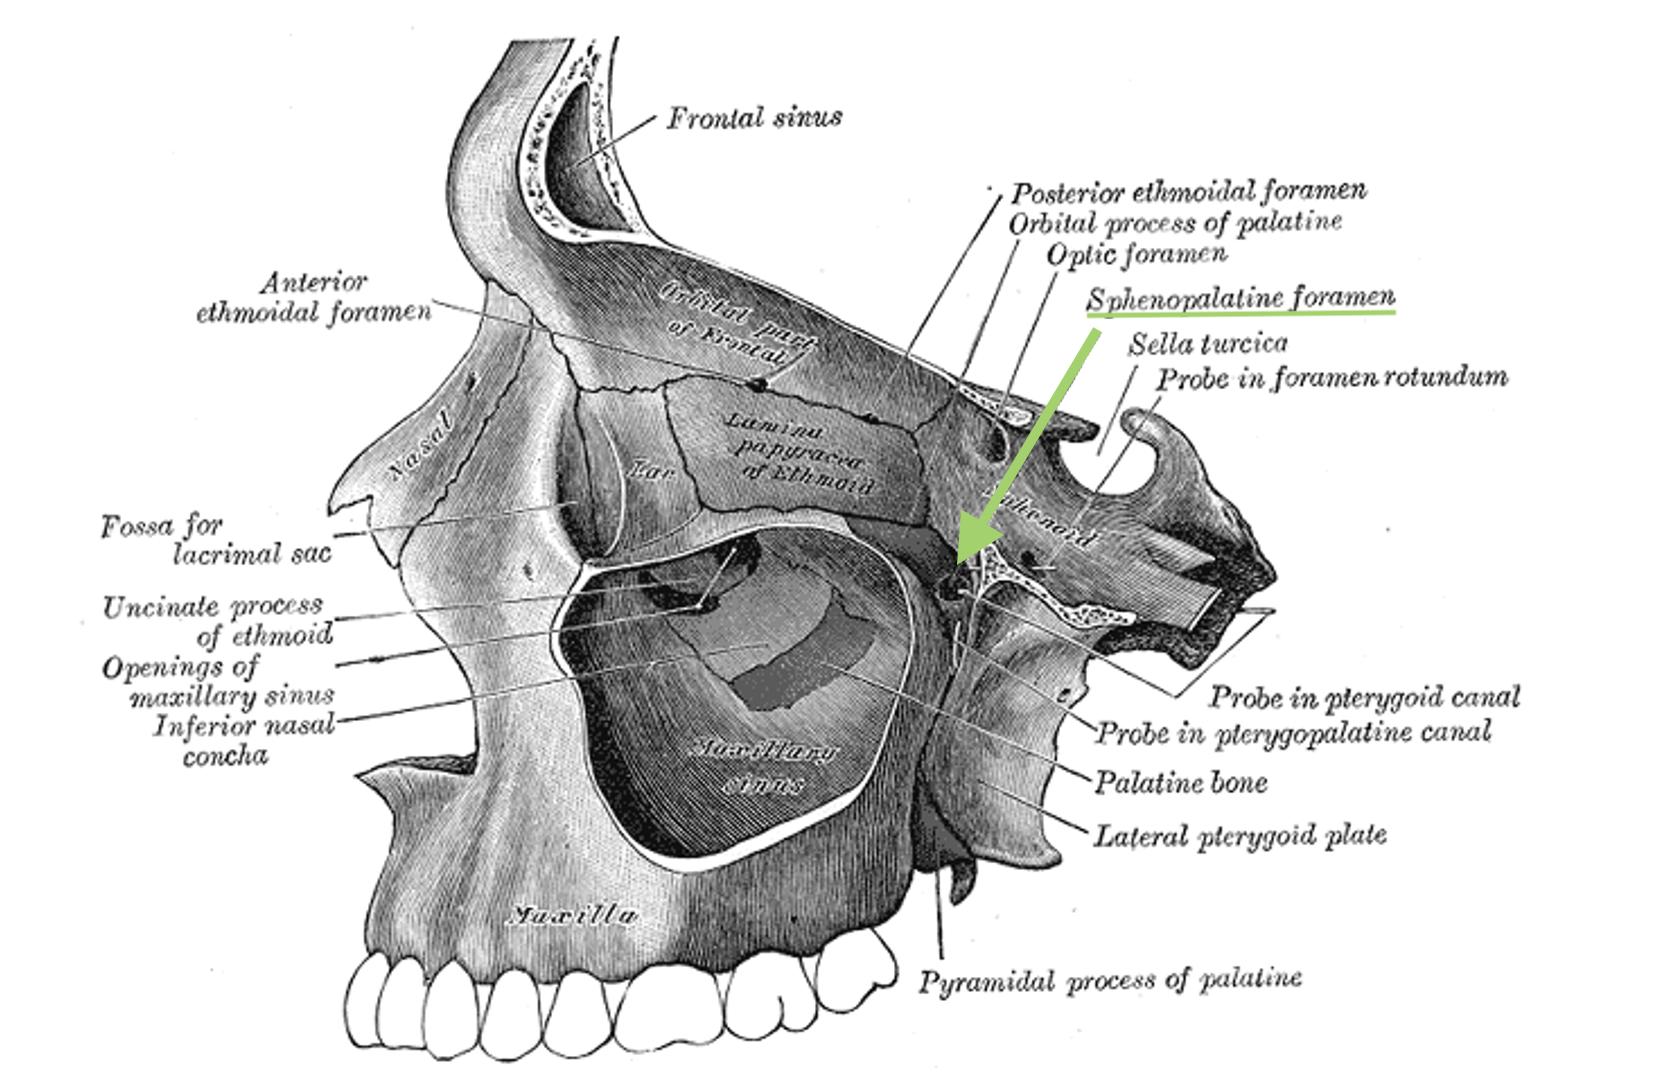 <p>Sphenopalatine Foramen. This image shows the sphenopalatine foramen's location and anatomical relationships.</p>